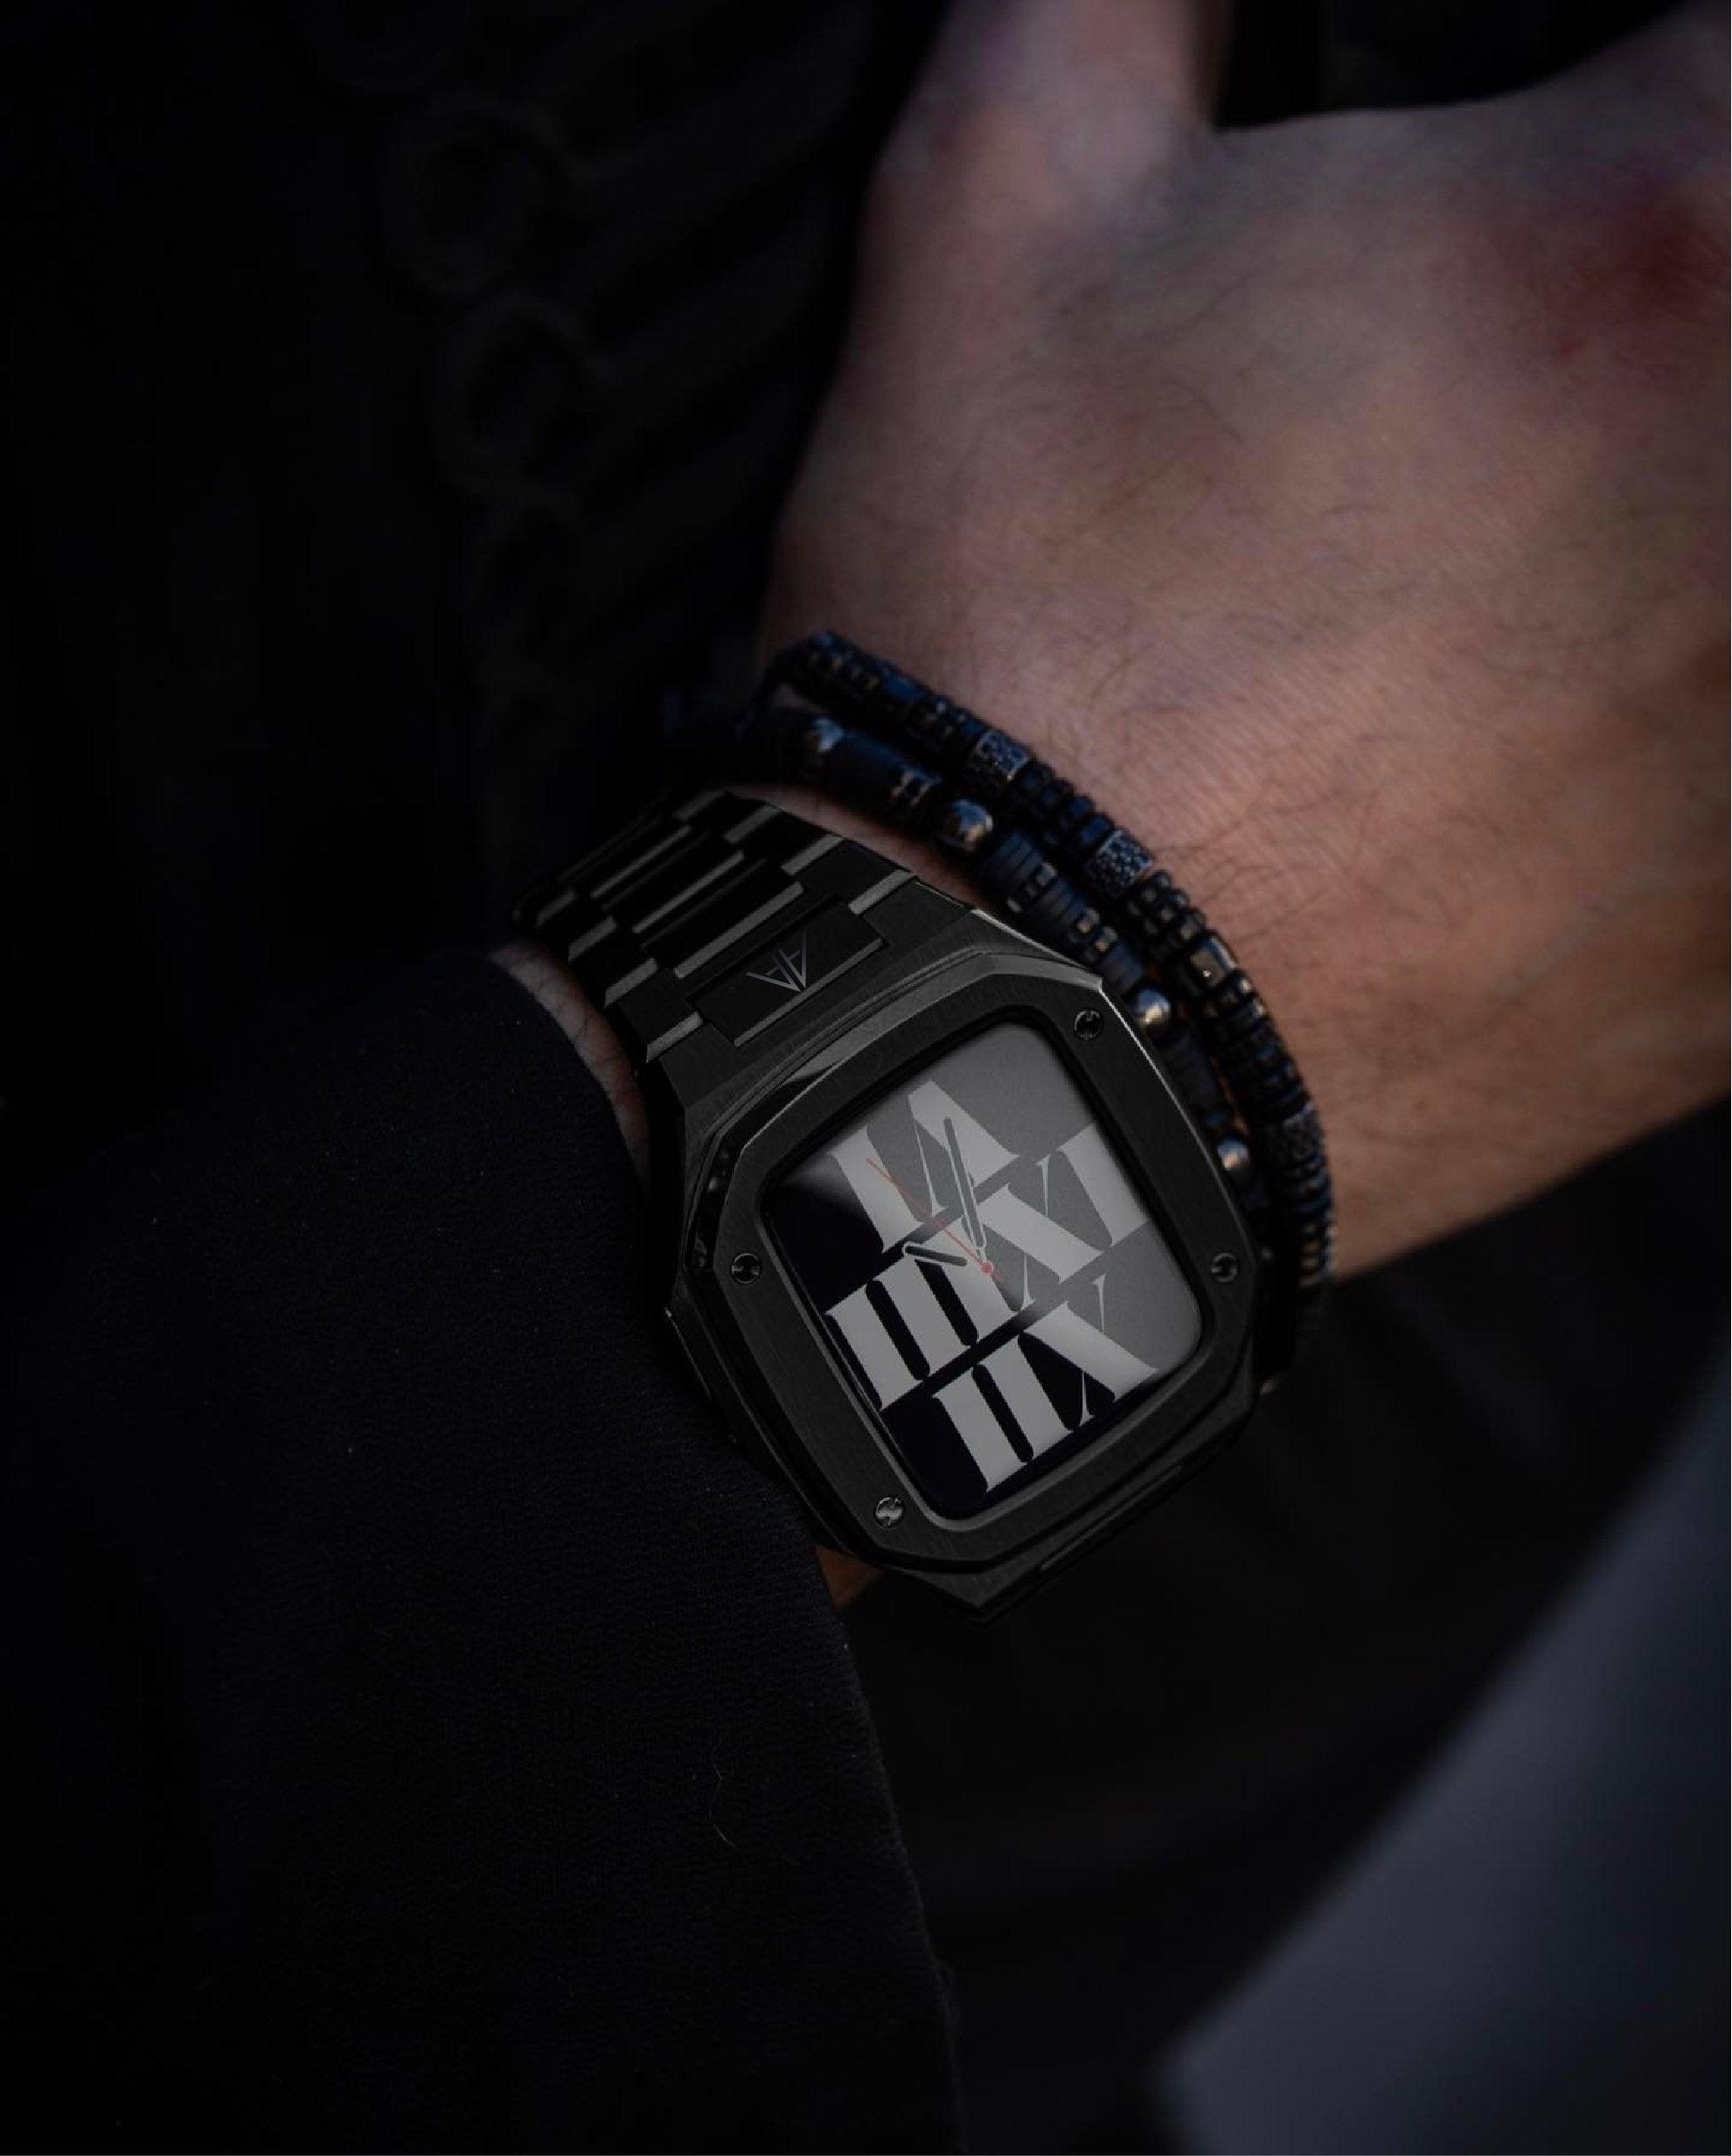 Apple watch case - Black with metal bracelet - ZIVRRI.COM